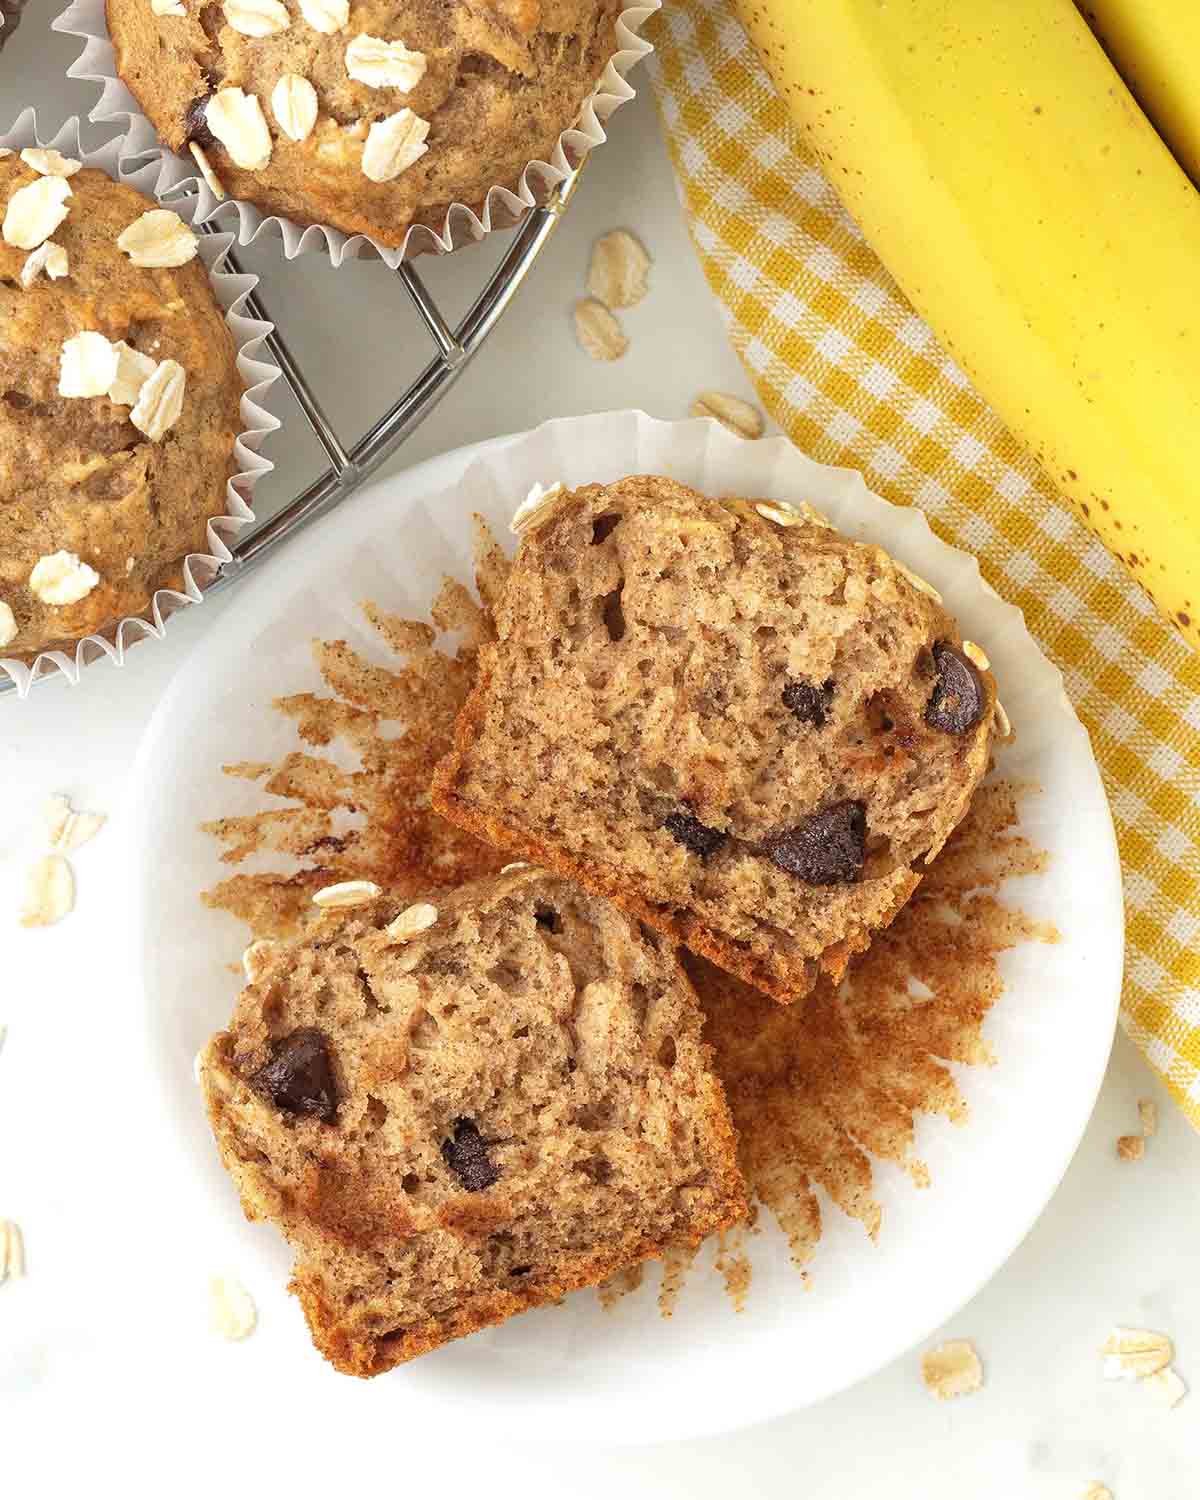 An overhead shot of a vegan gluten-free banana oatmeal muffin cut in half to show the fluffy inside.